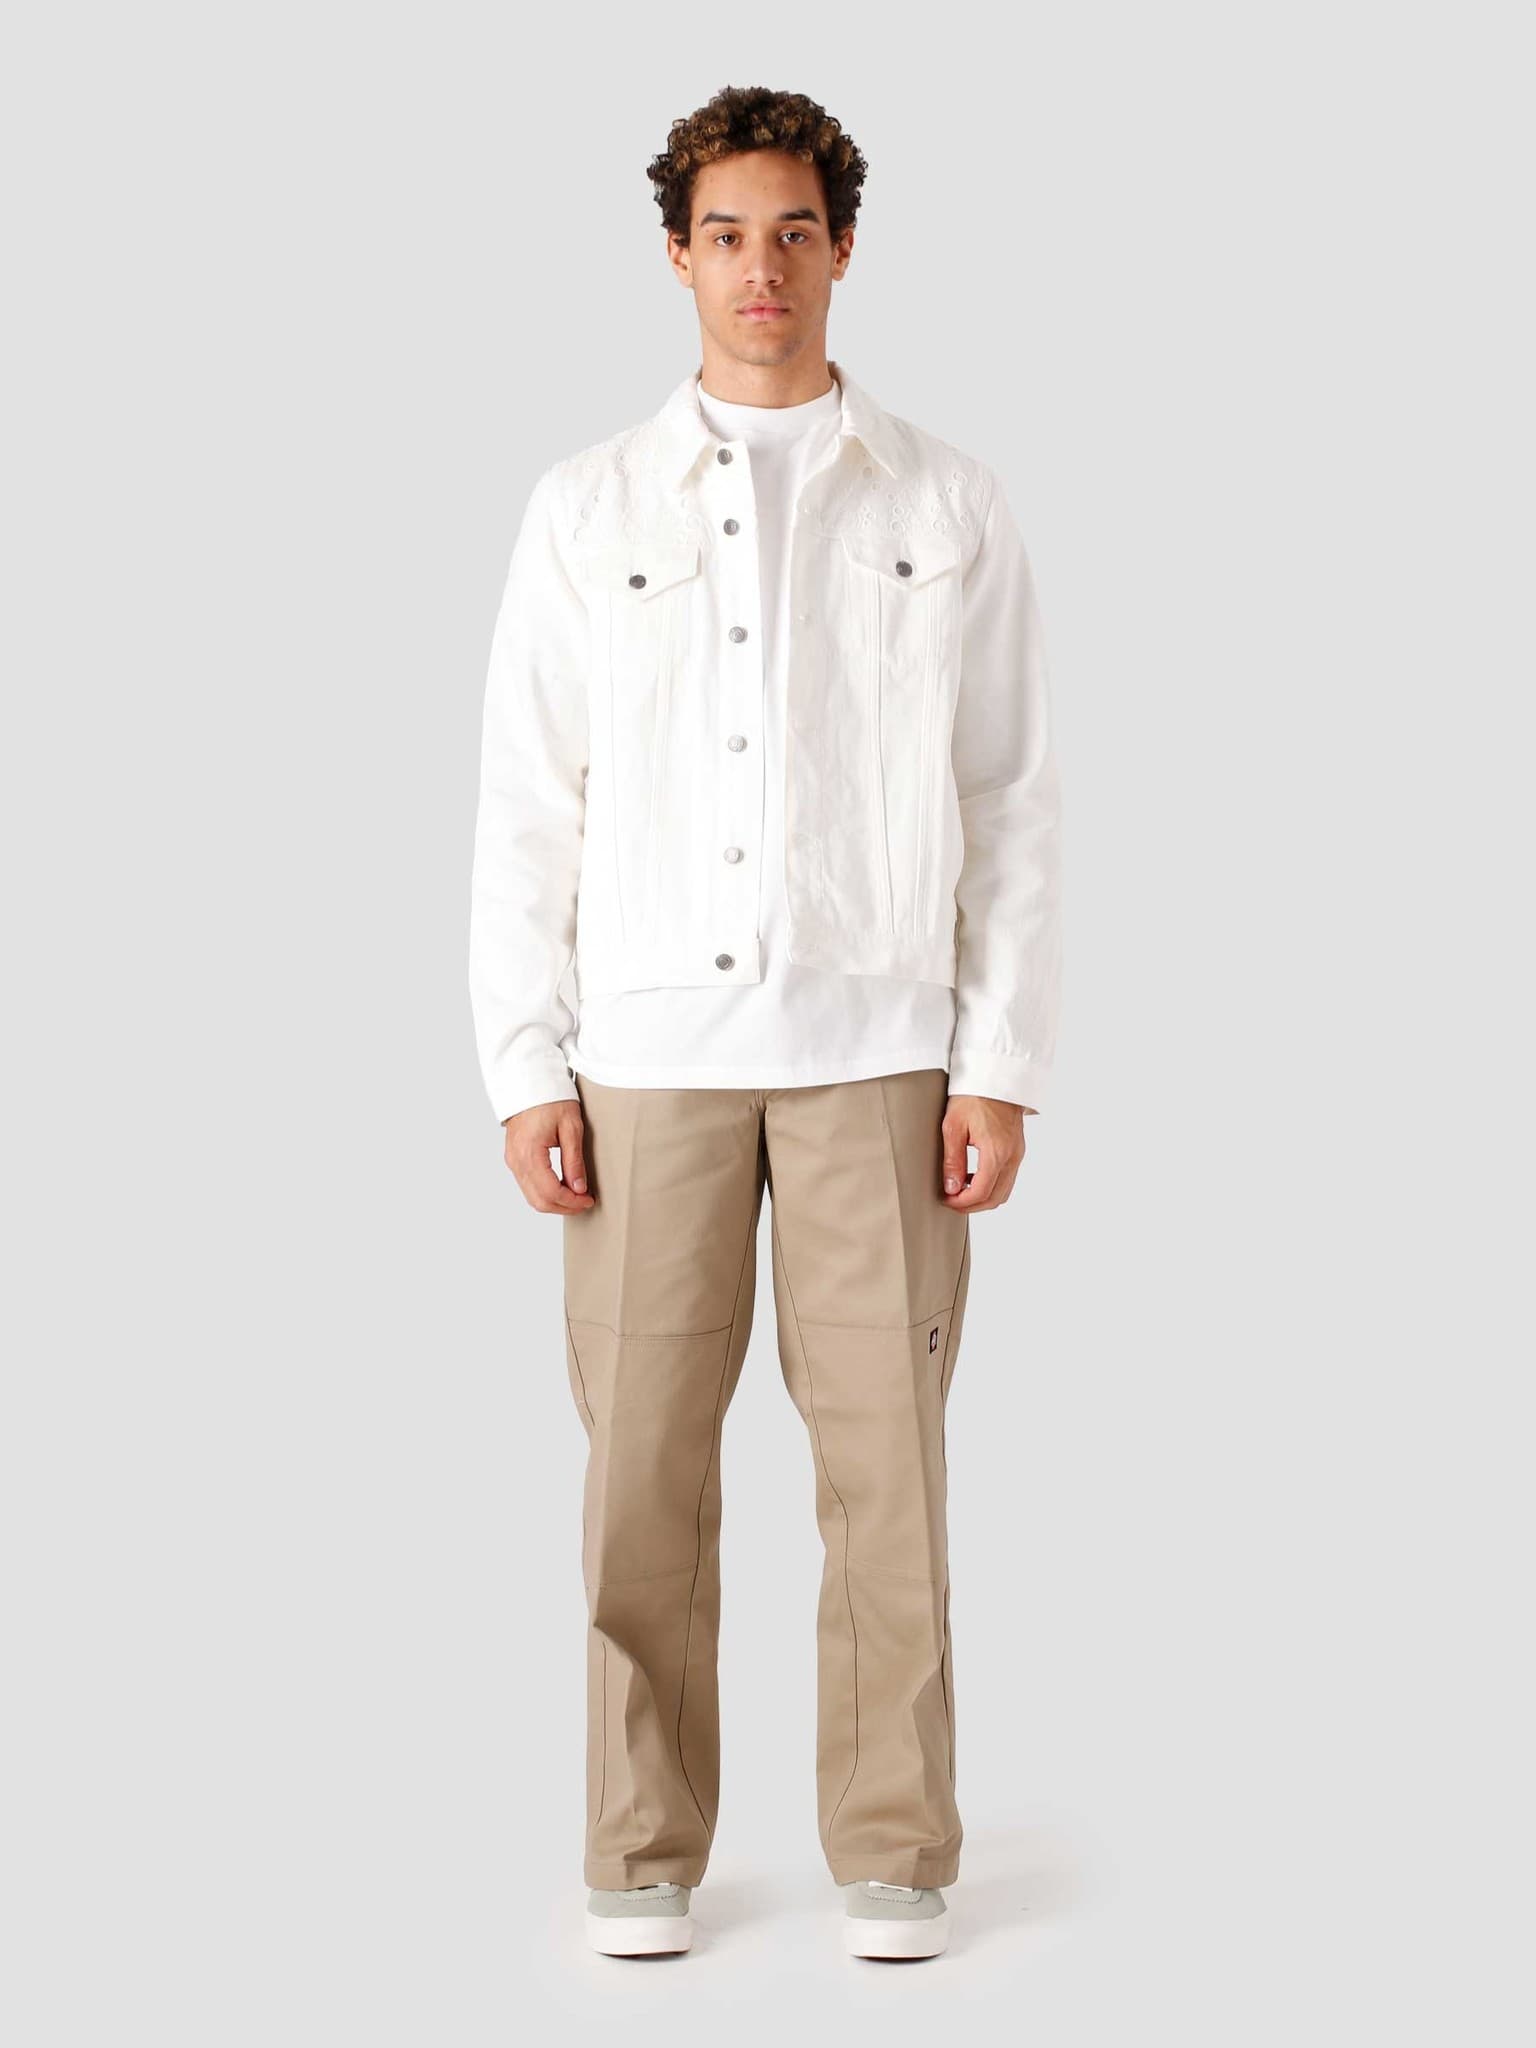 Kajean Jeans Jacket White 2111153